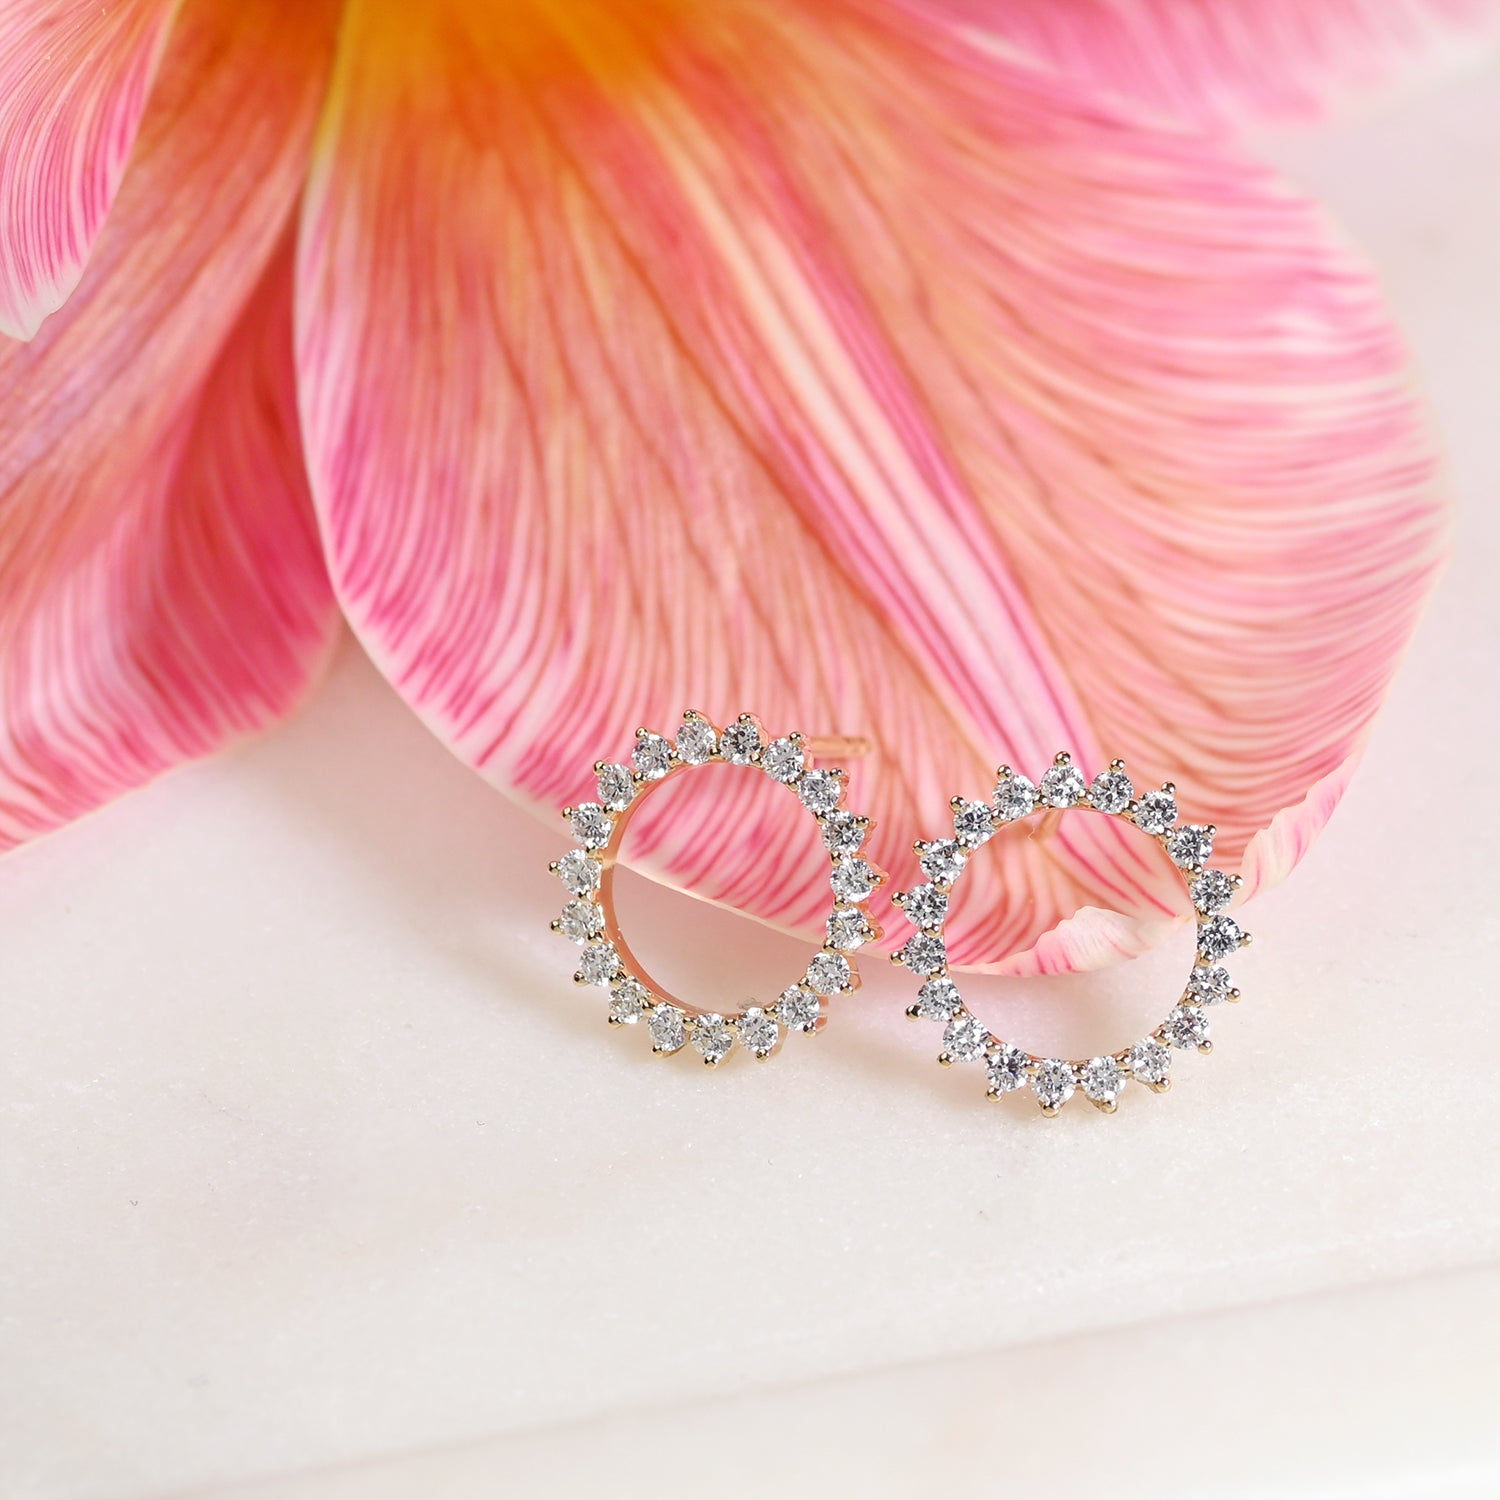 halo diamond earrings mother's day